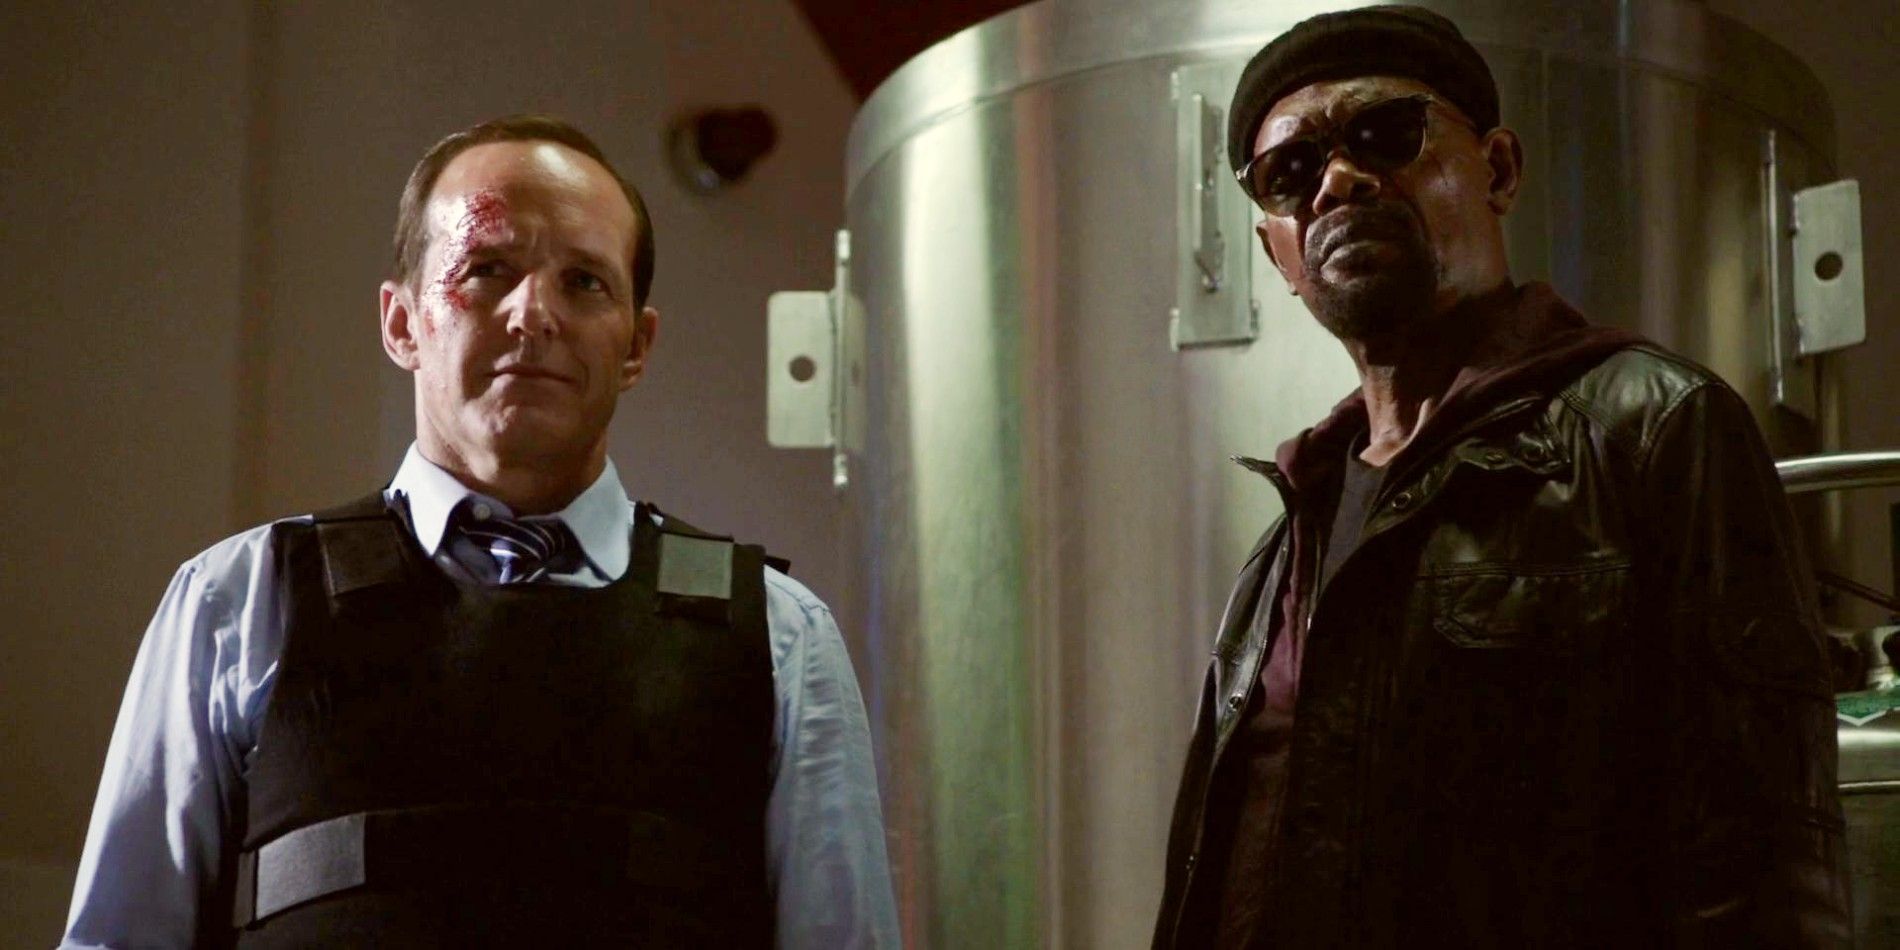 phil coulson alongside nick fury in agents of shield season 1